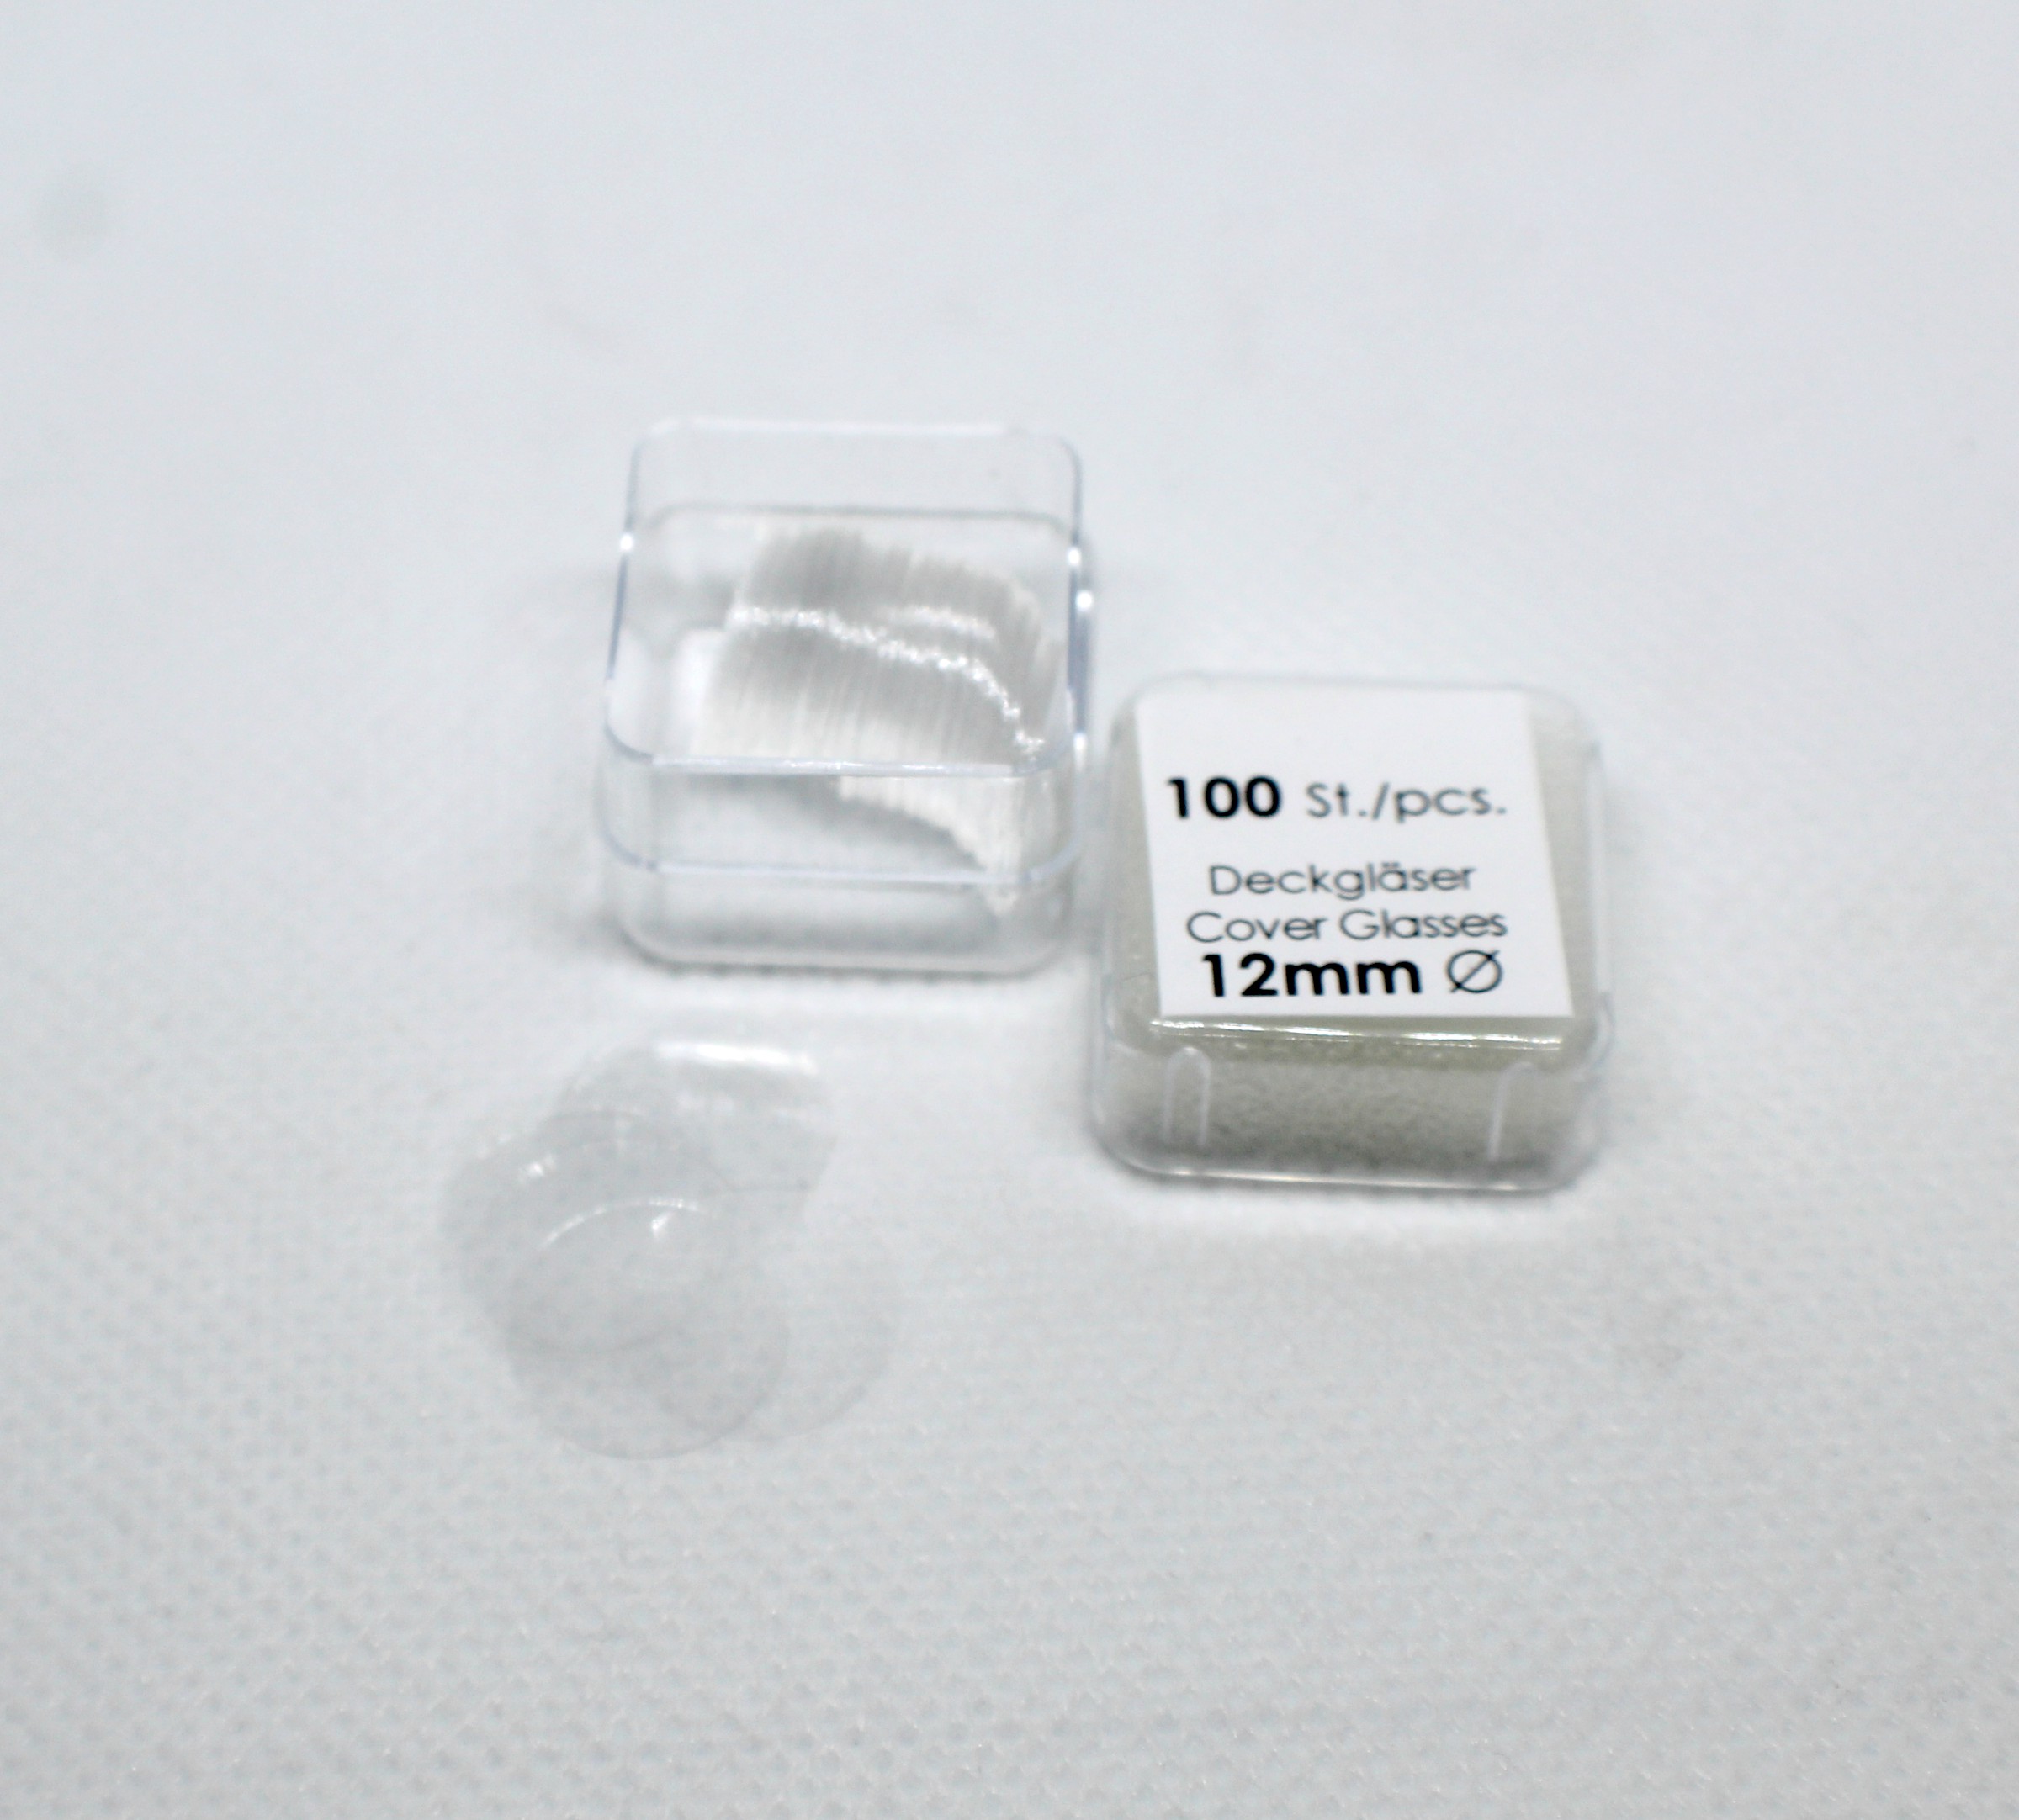 Bellco Glass 1943-10012 German Glass Round Cover Slip #1 Thickness 100 cover slips 12mm Diameter